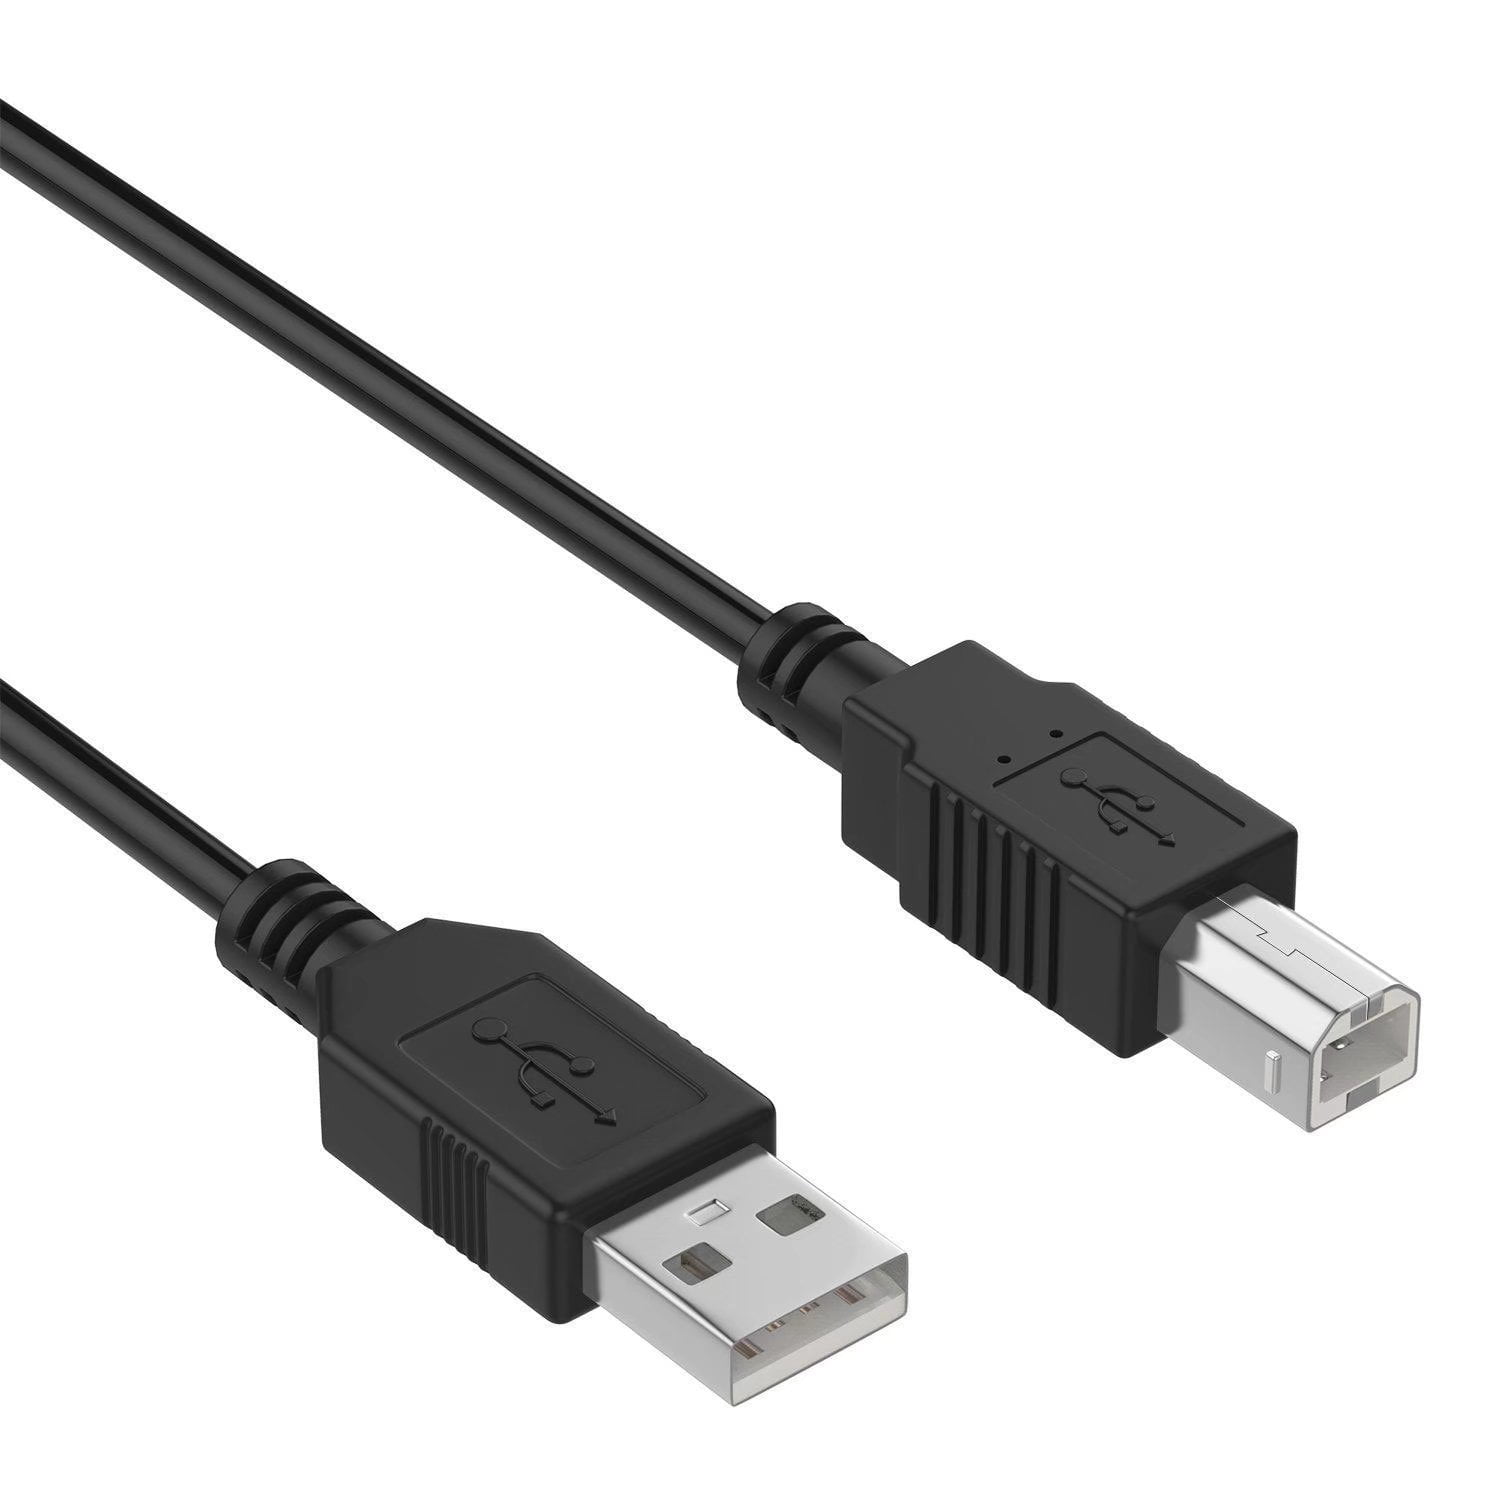 overskæg Blueprint mandat PwrON 6ft USB 2.0 A-B Cable Cord Replacement for HP EPSON DELL Scanner  KODAK Printer - Walmart.com